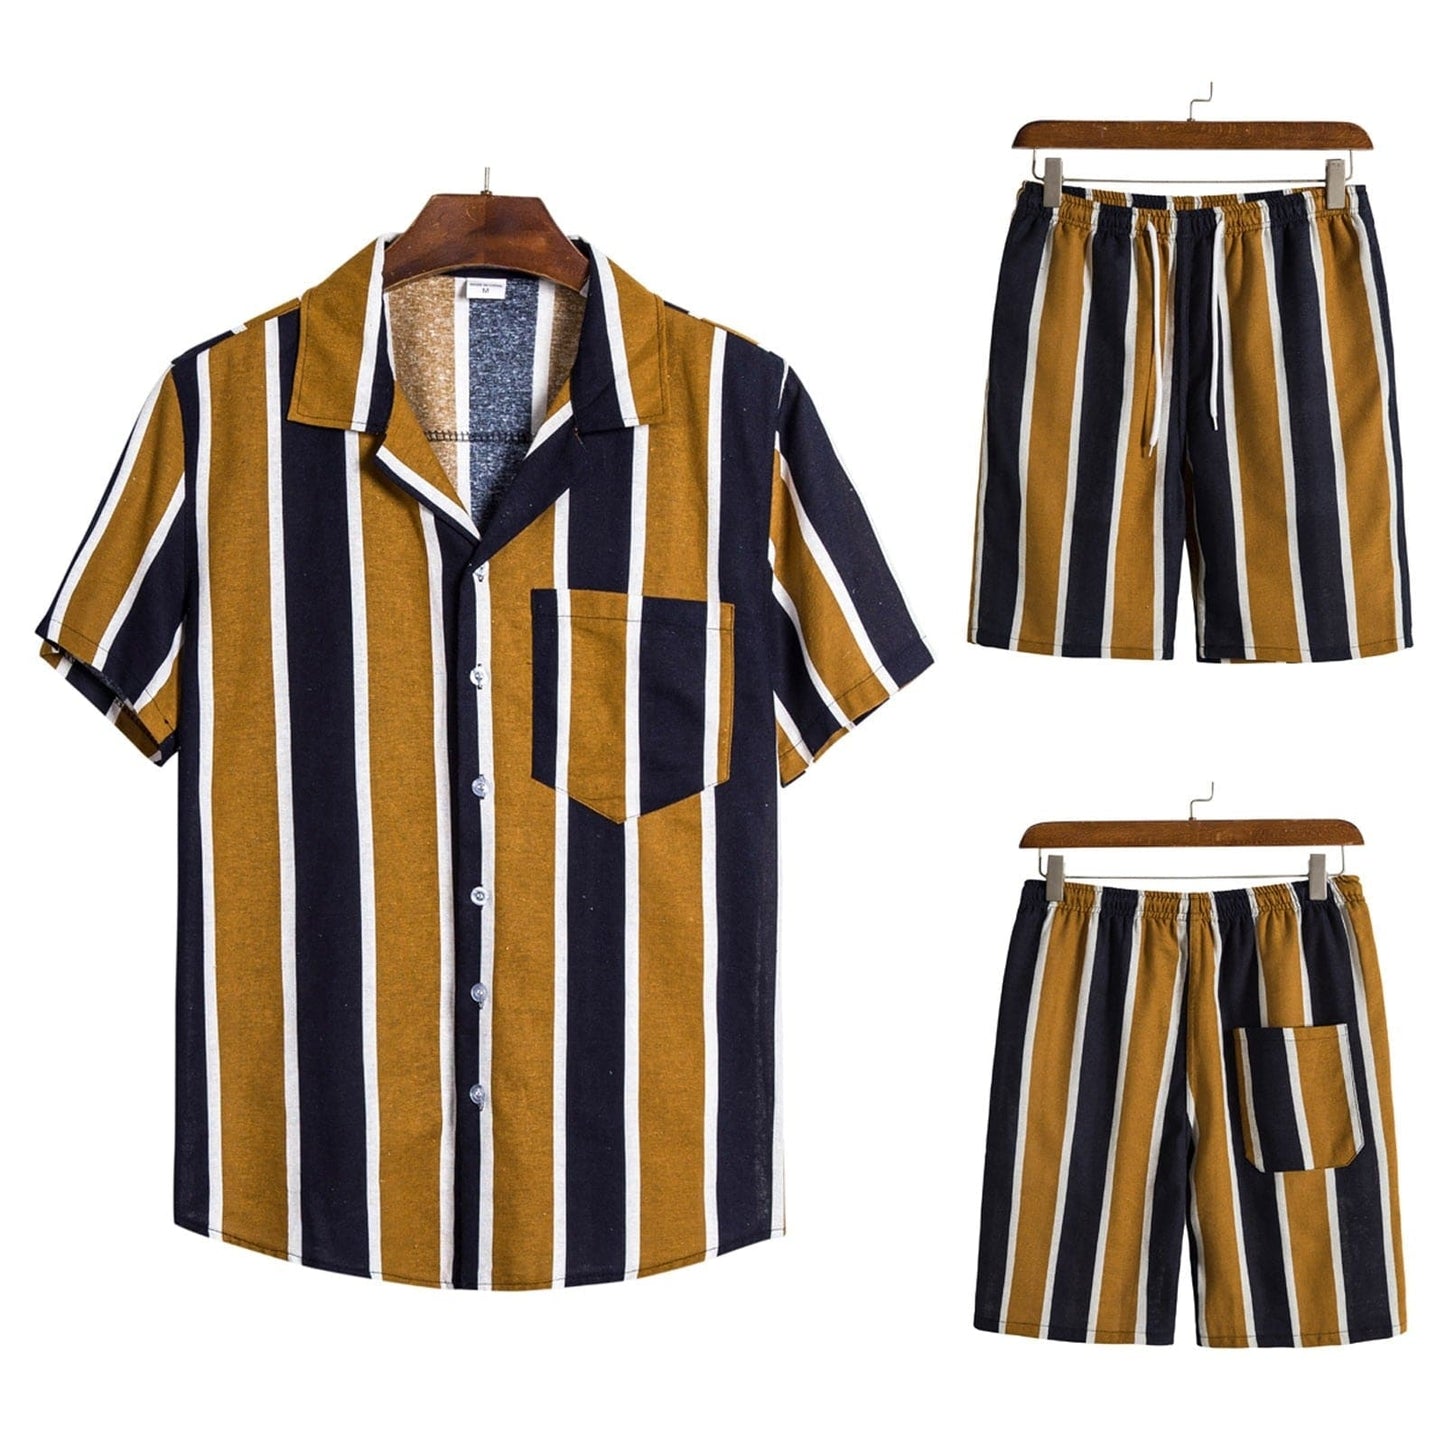 Men's Summer Short Sleeve Shirt + Shorts